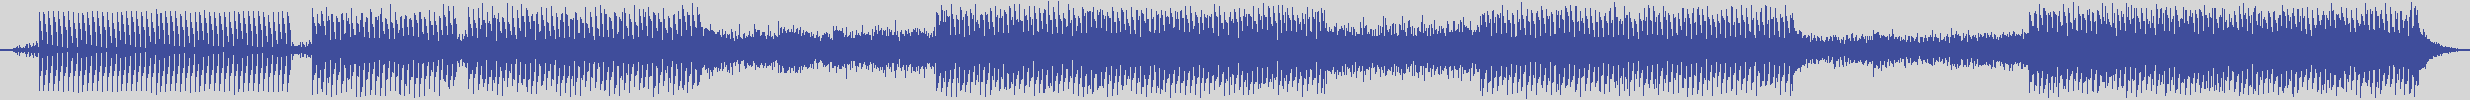 nf_boyz_records [NFY039] Cristian Matrix - Chamber of Spur [Original Mix] audio wave form